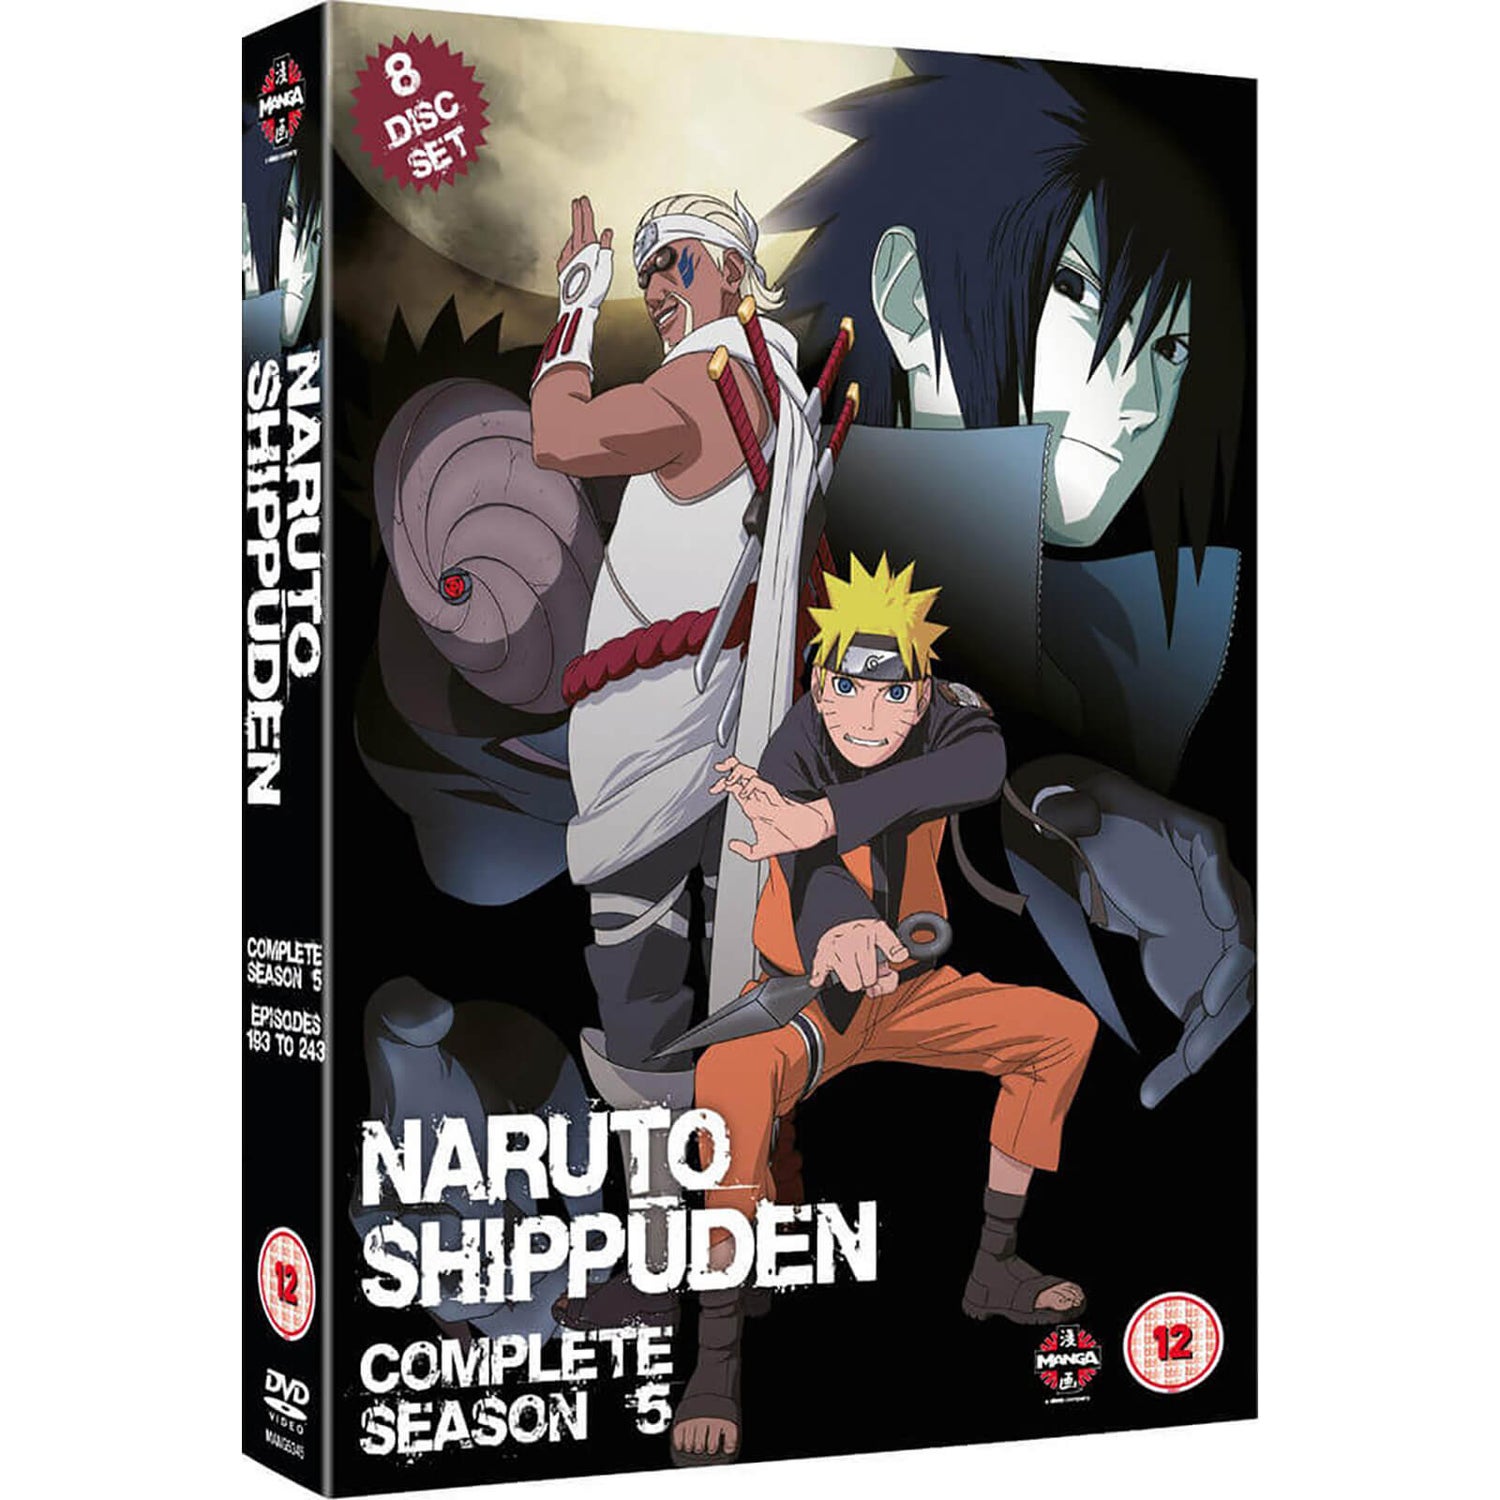 Naruto Shippuden: ナルト- 疾風伝